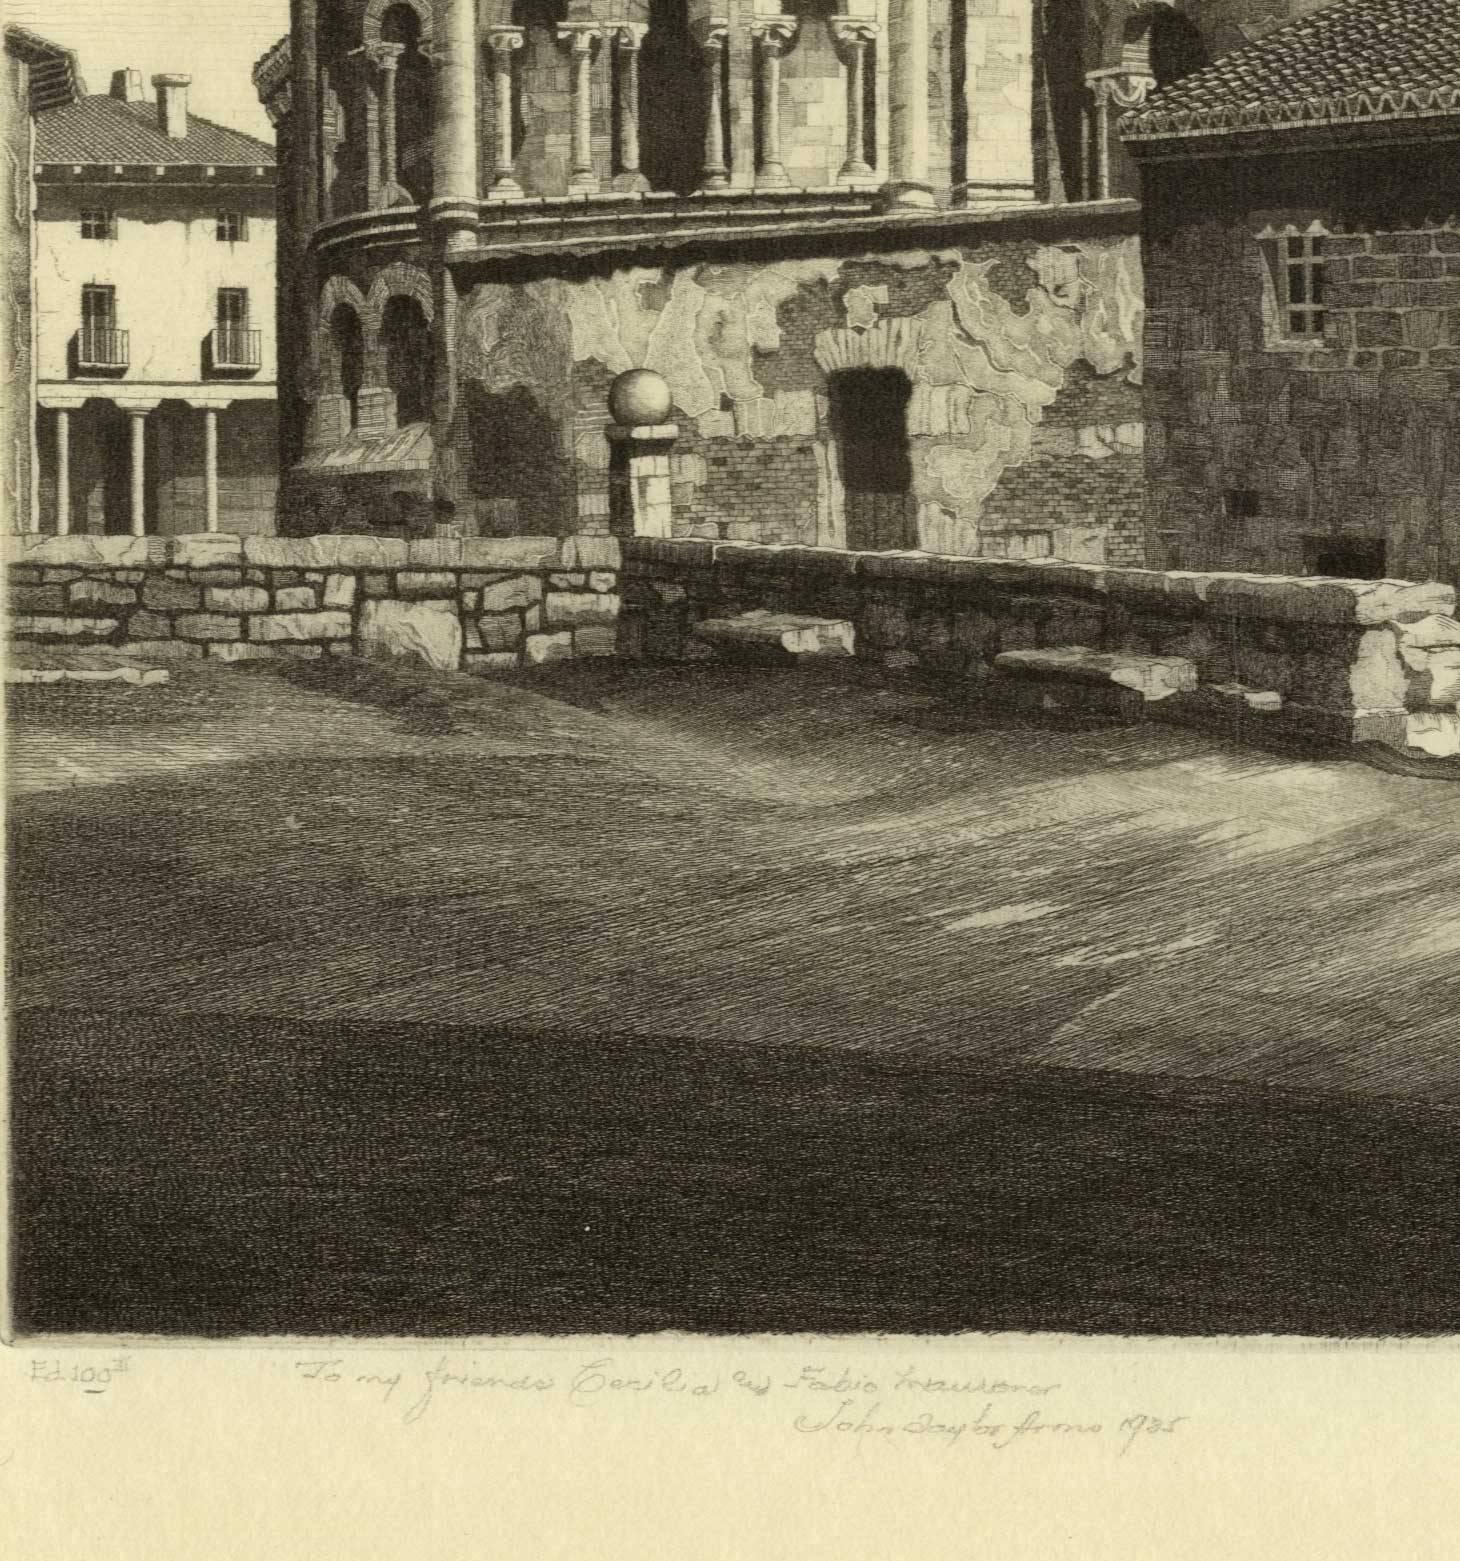 La Colegiata Toro (Romanesque Santa Maria la Mayor/Zamora province Espagne) - Beige Print par John Taylor Arms